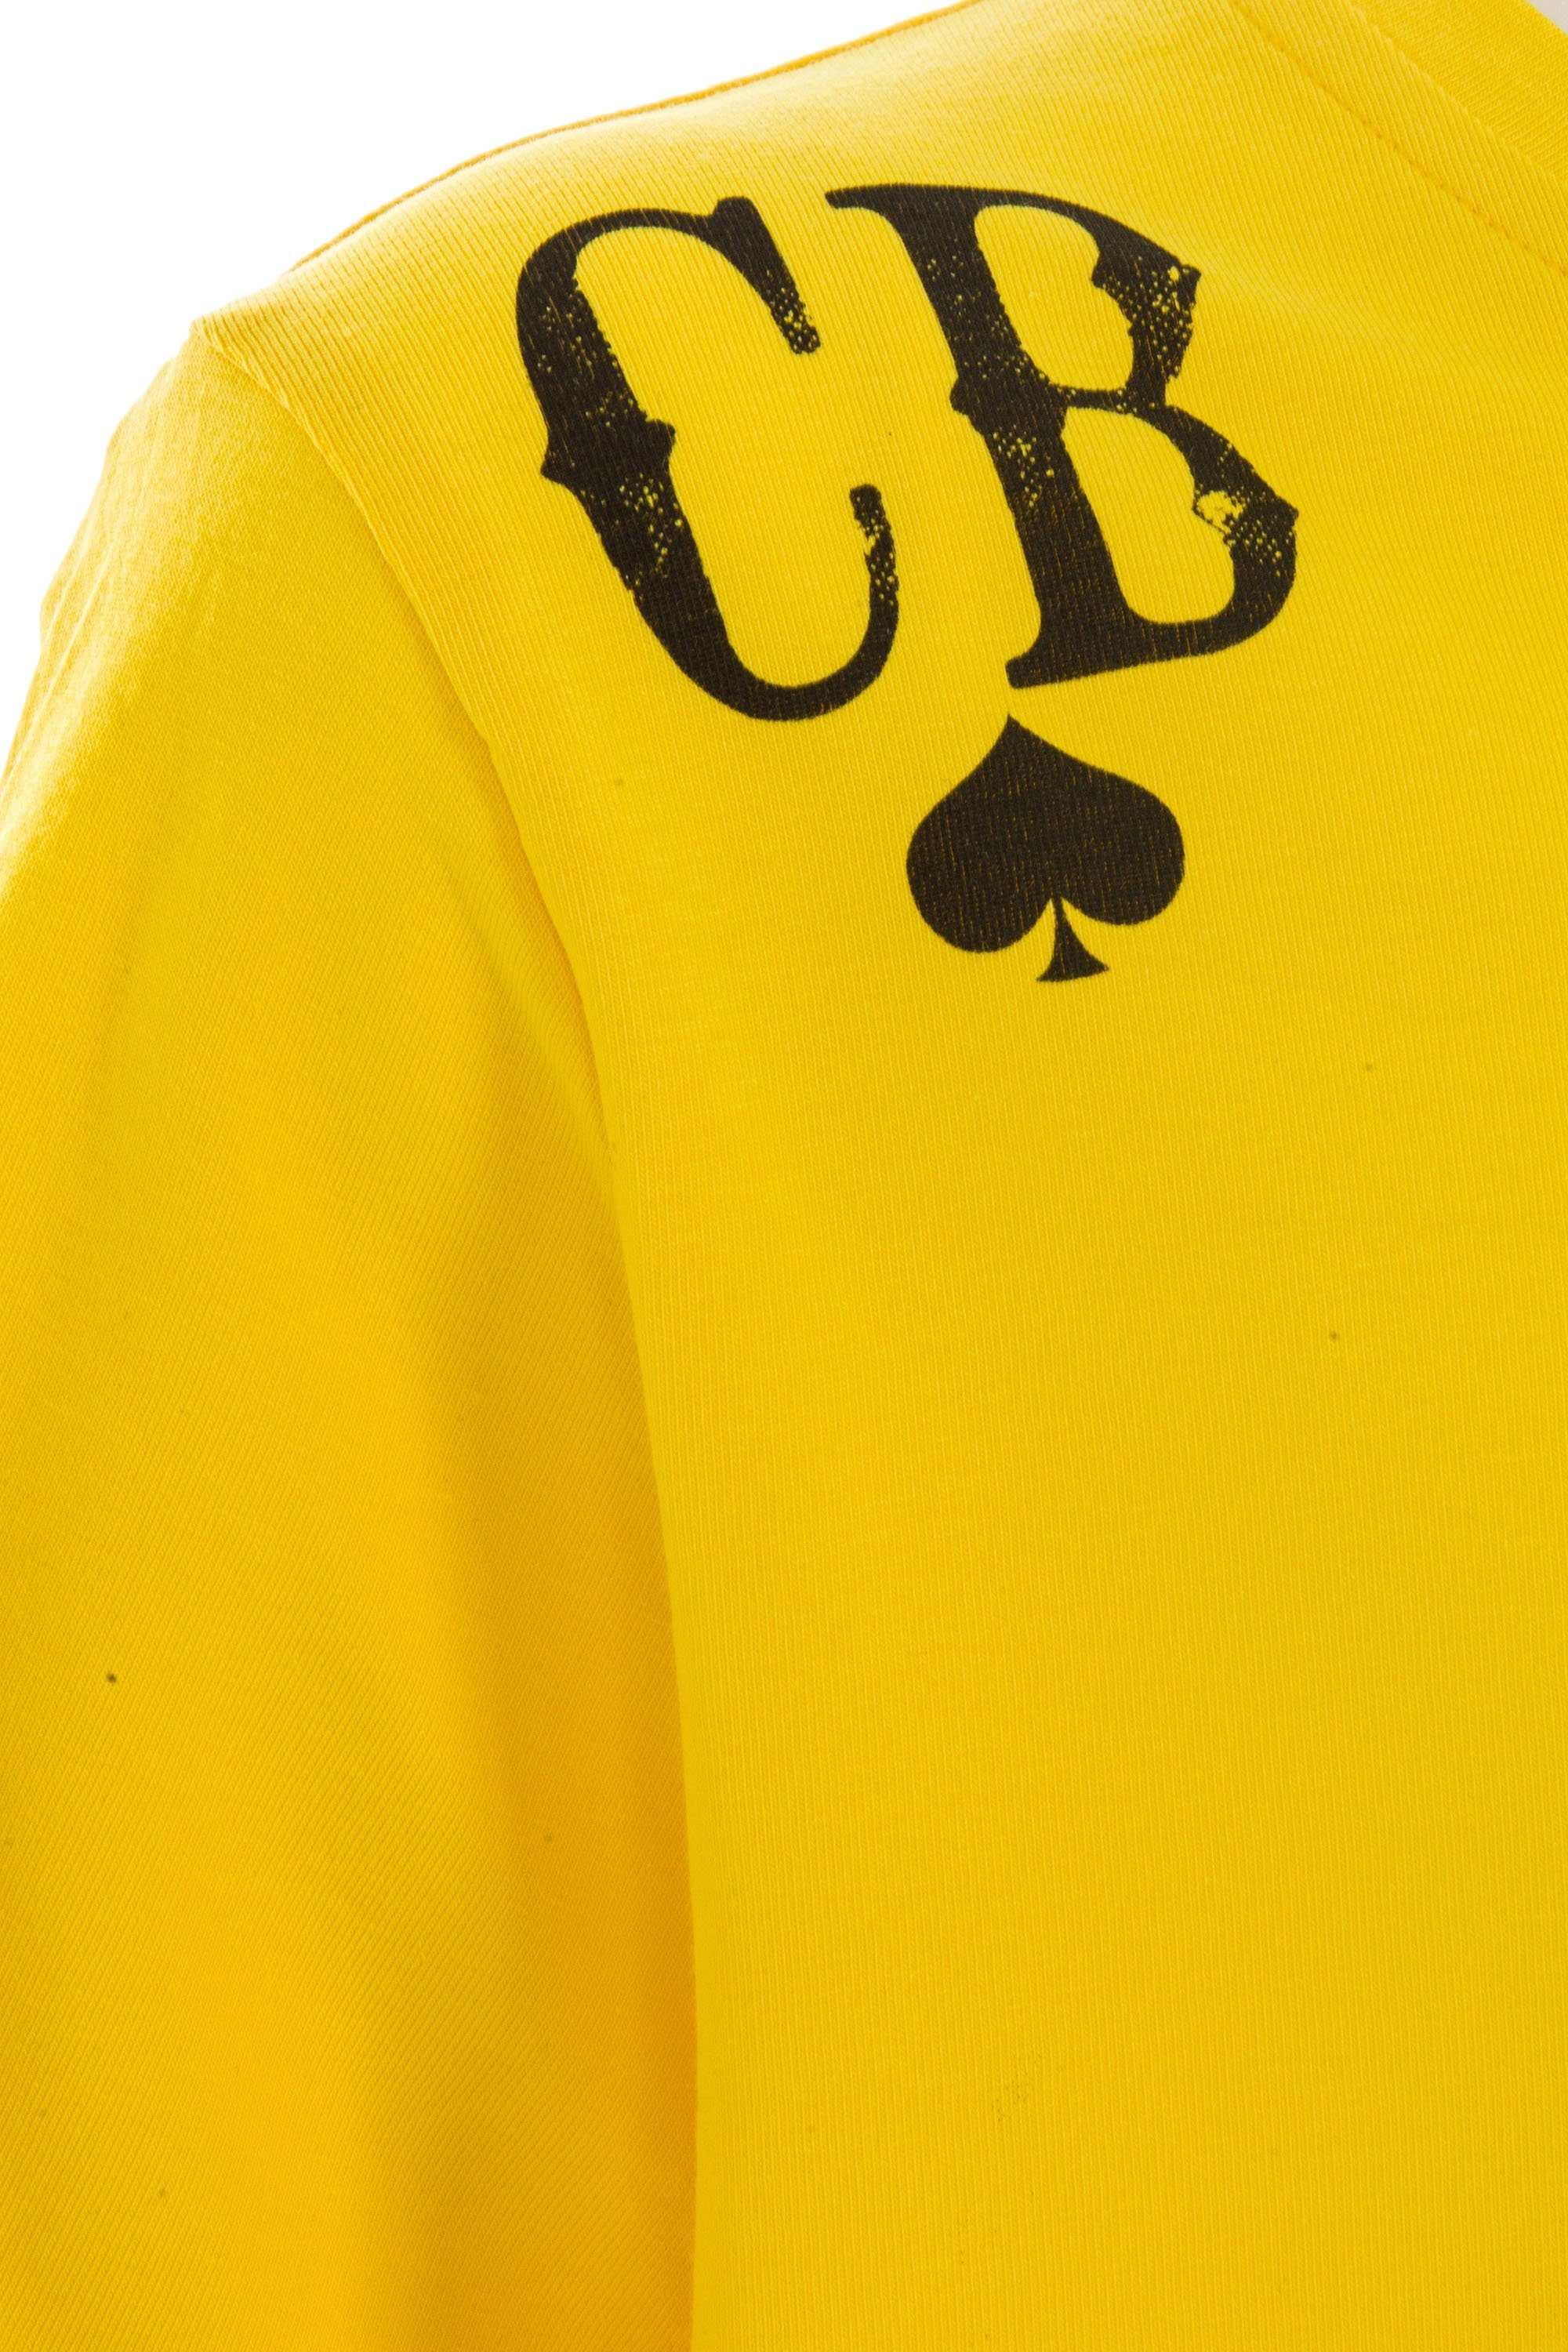 mit & Baxx coolem Print gelb-schwarz T-Shirt Cipo